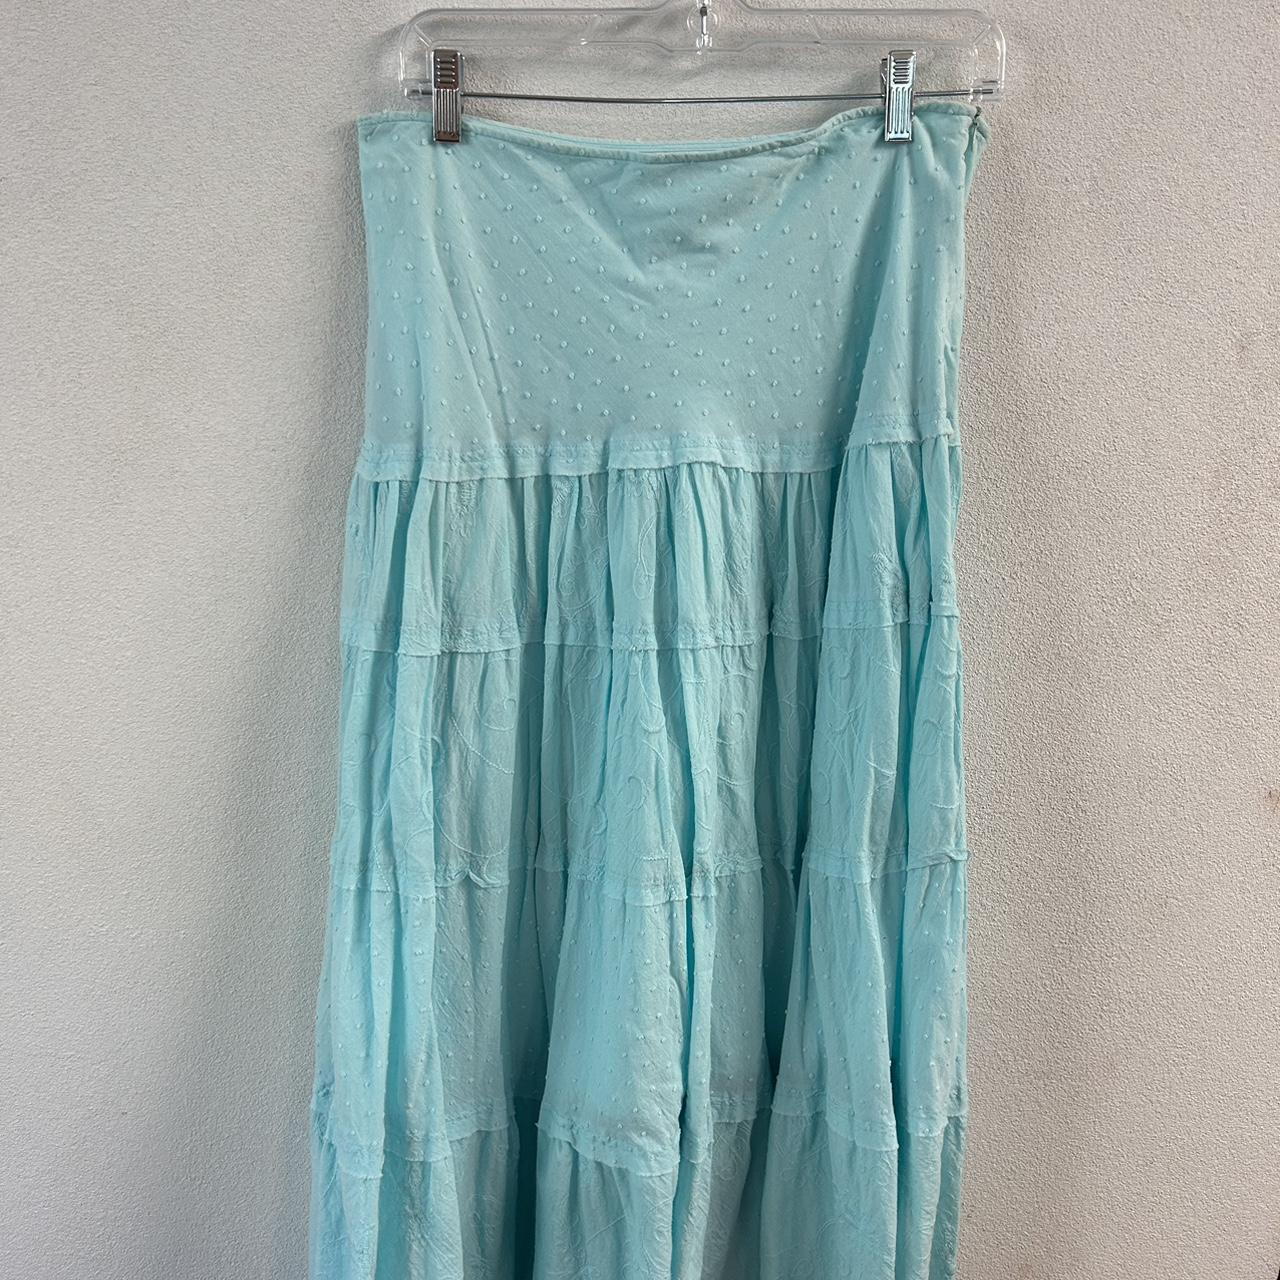 Liz Gordon Gypsy style vintage blue ruffled skirt :... - Depop